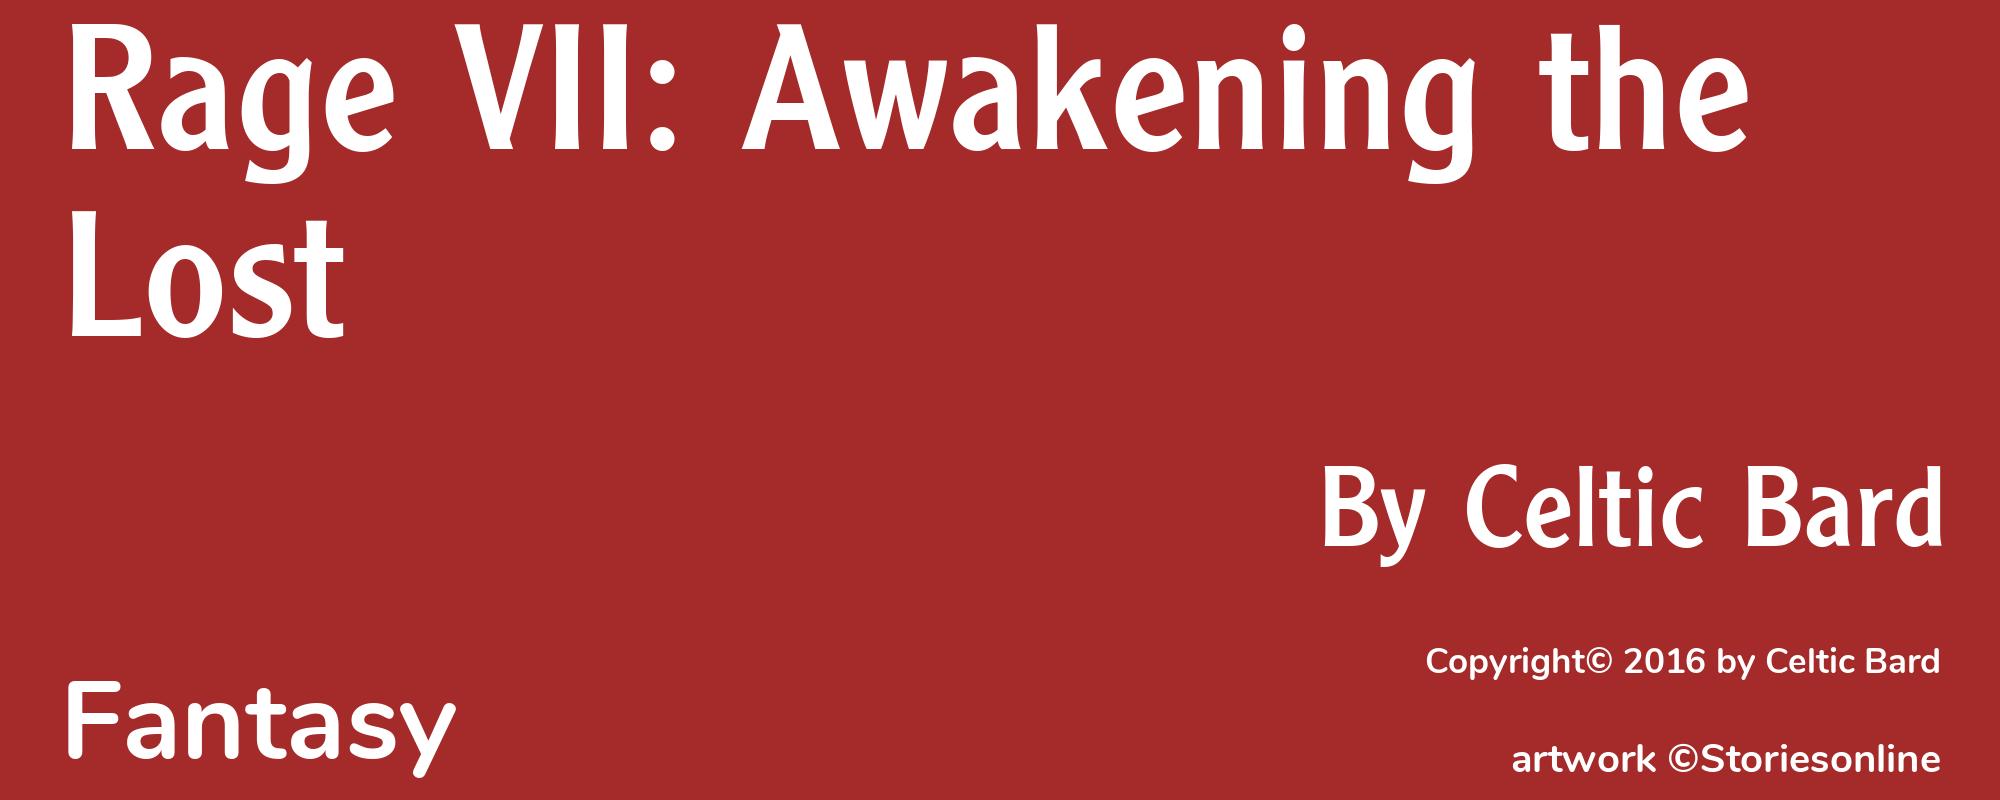 Rage VII: Awakening the Lost - Cover